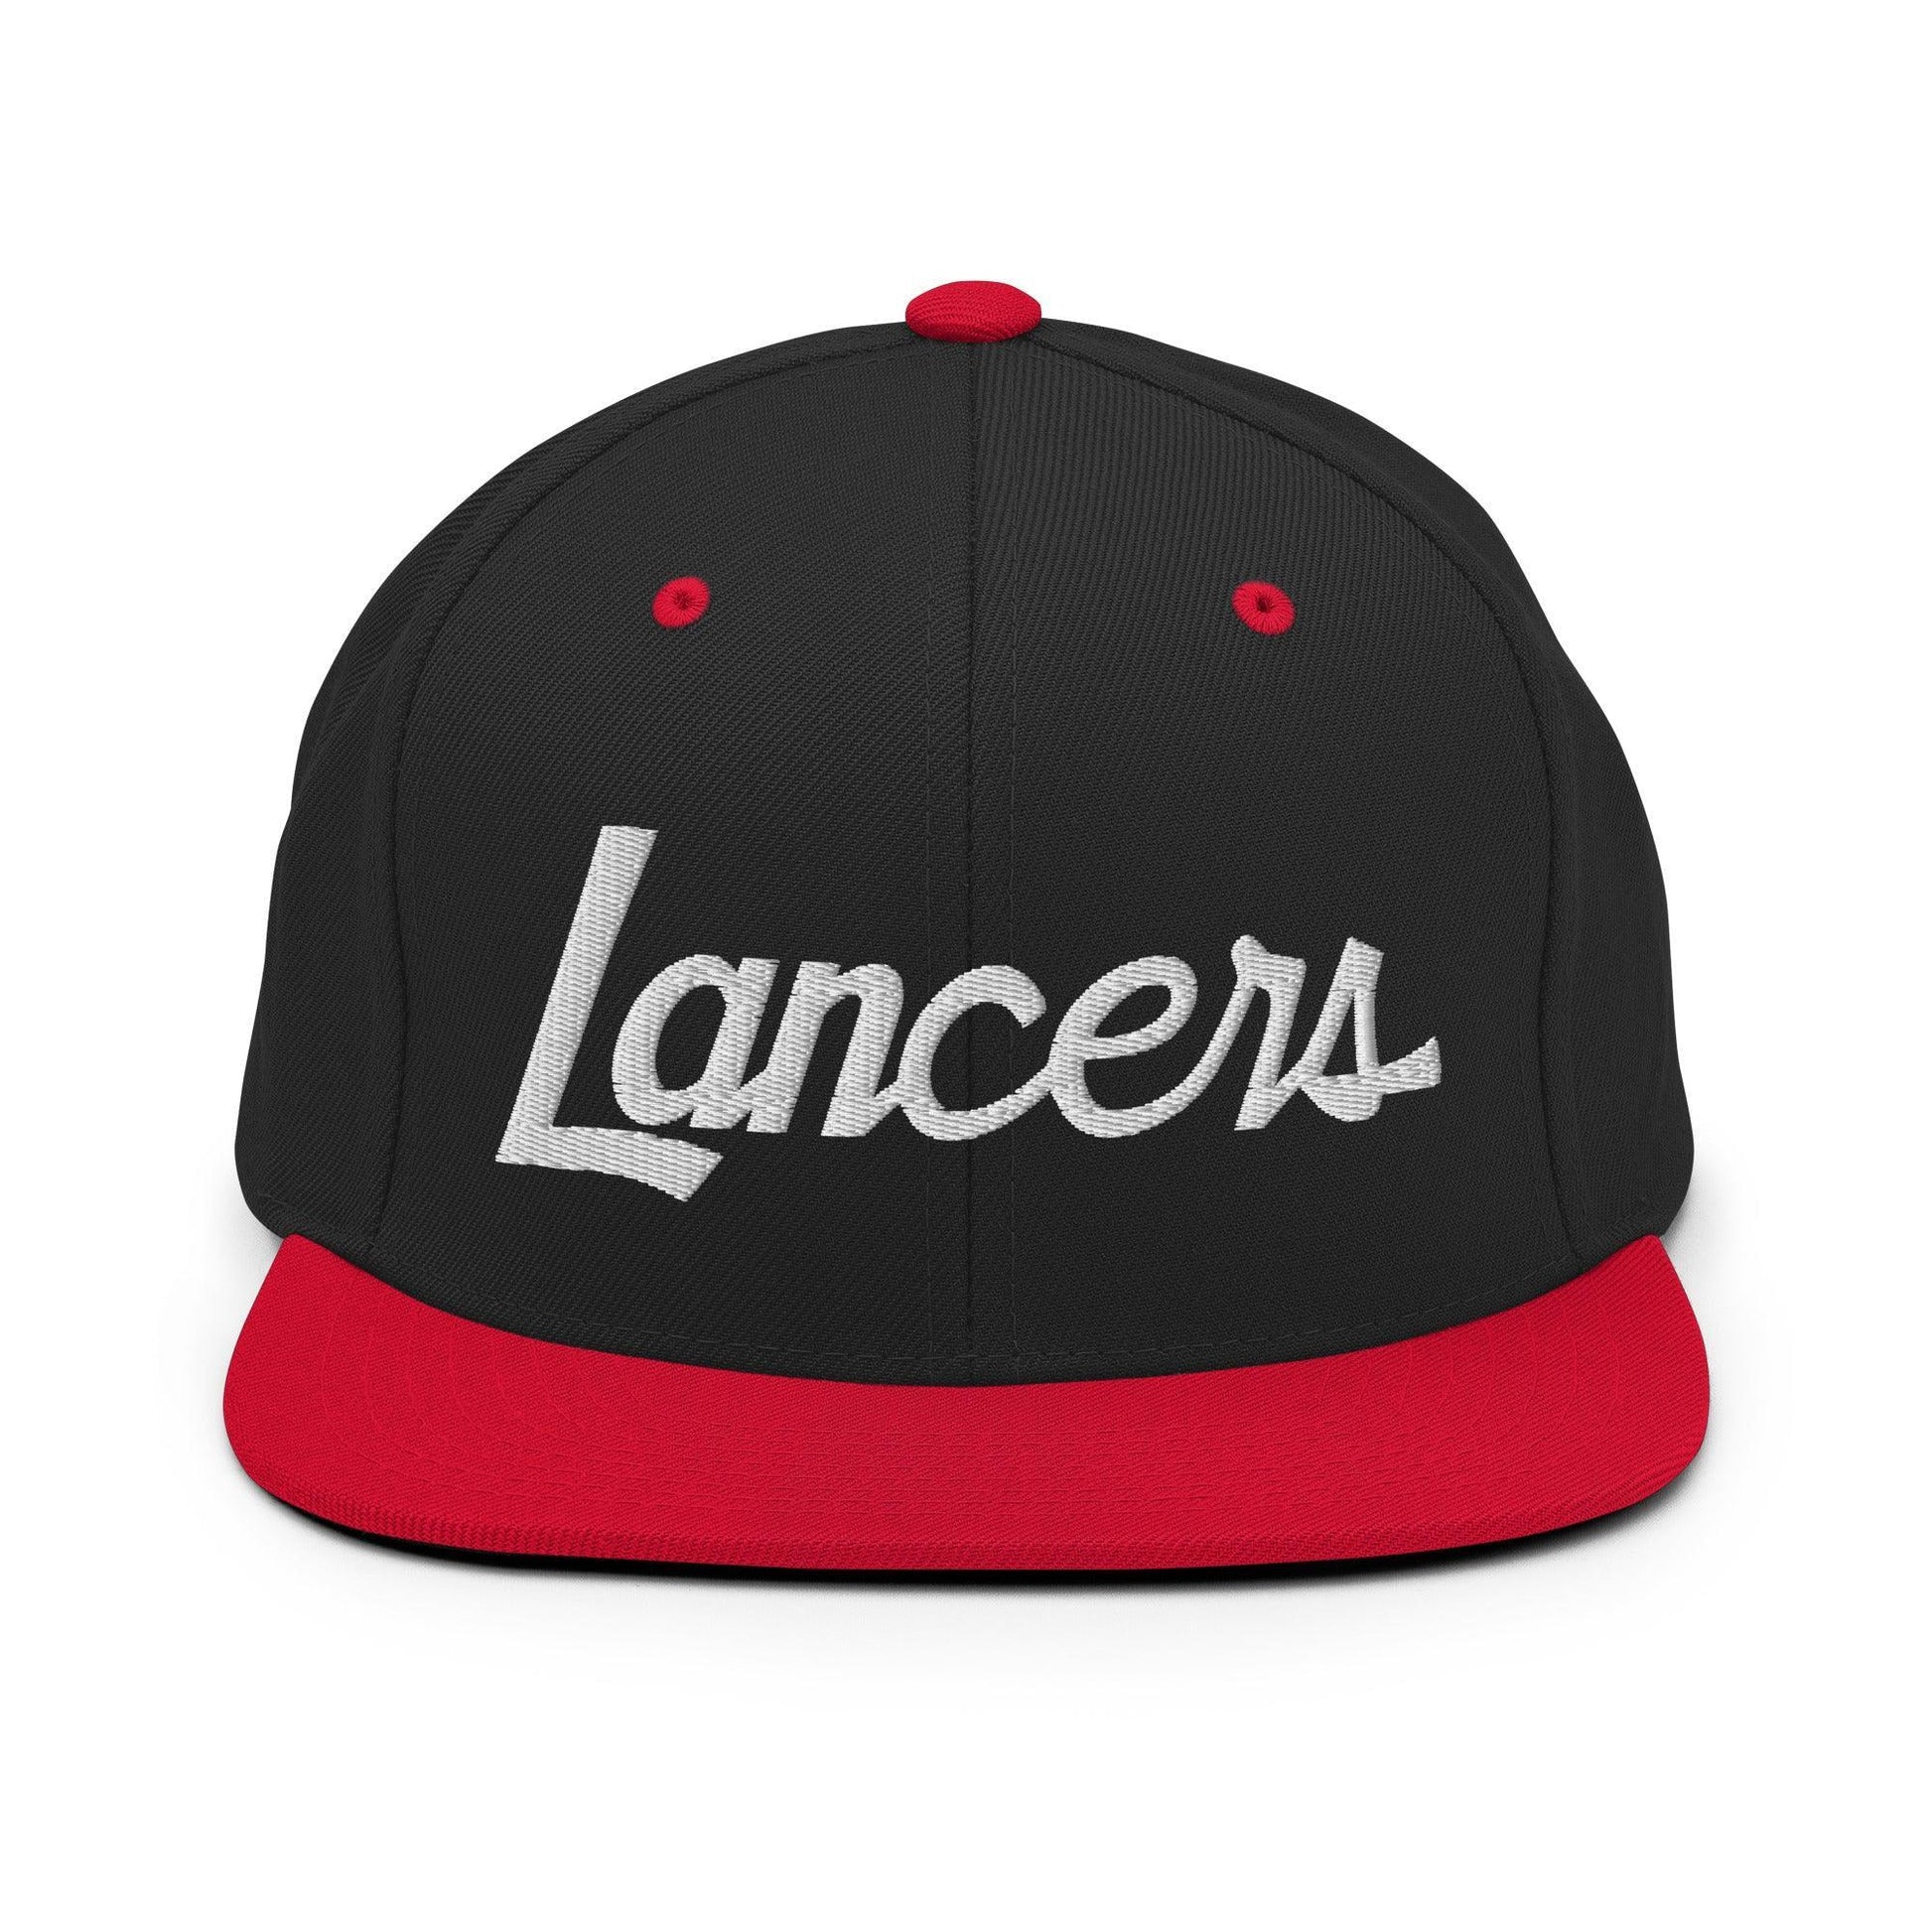 Lancers School Mascot Script Snapback Hat Black/ Red